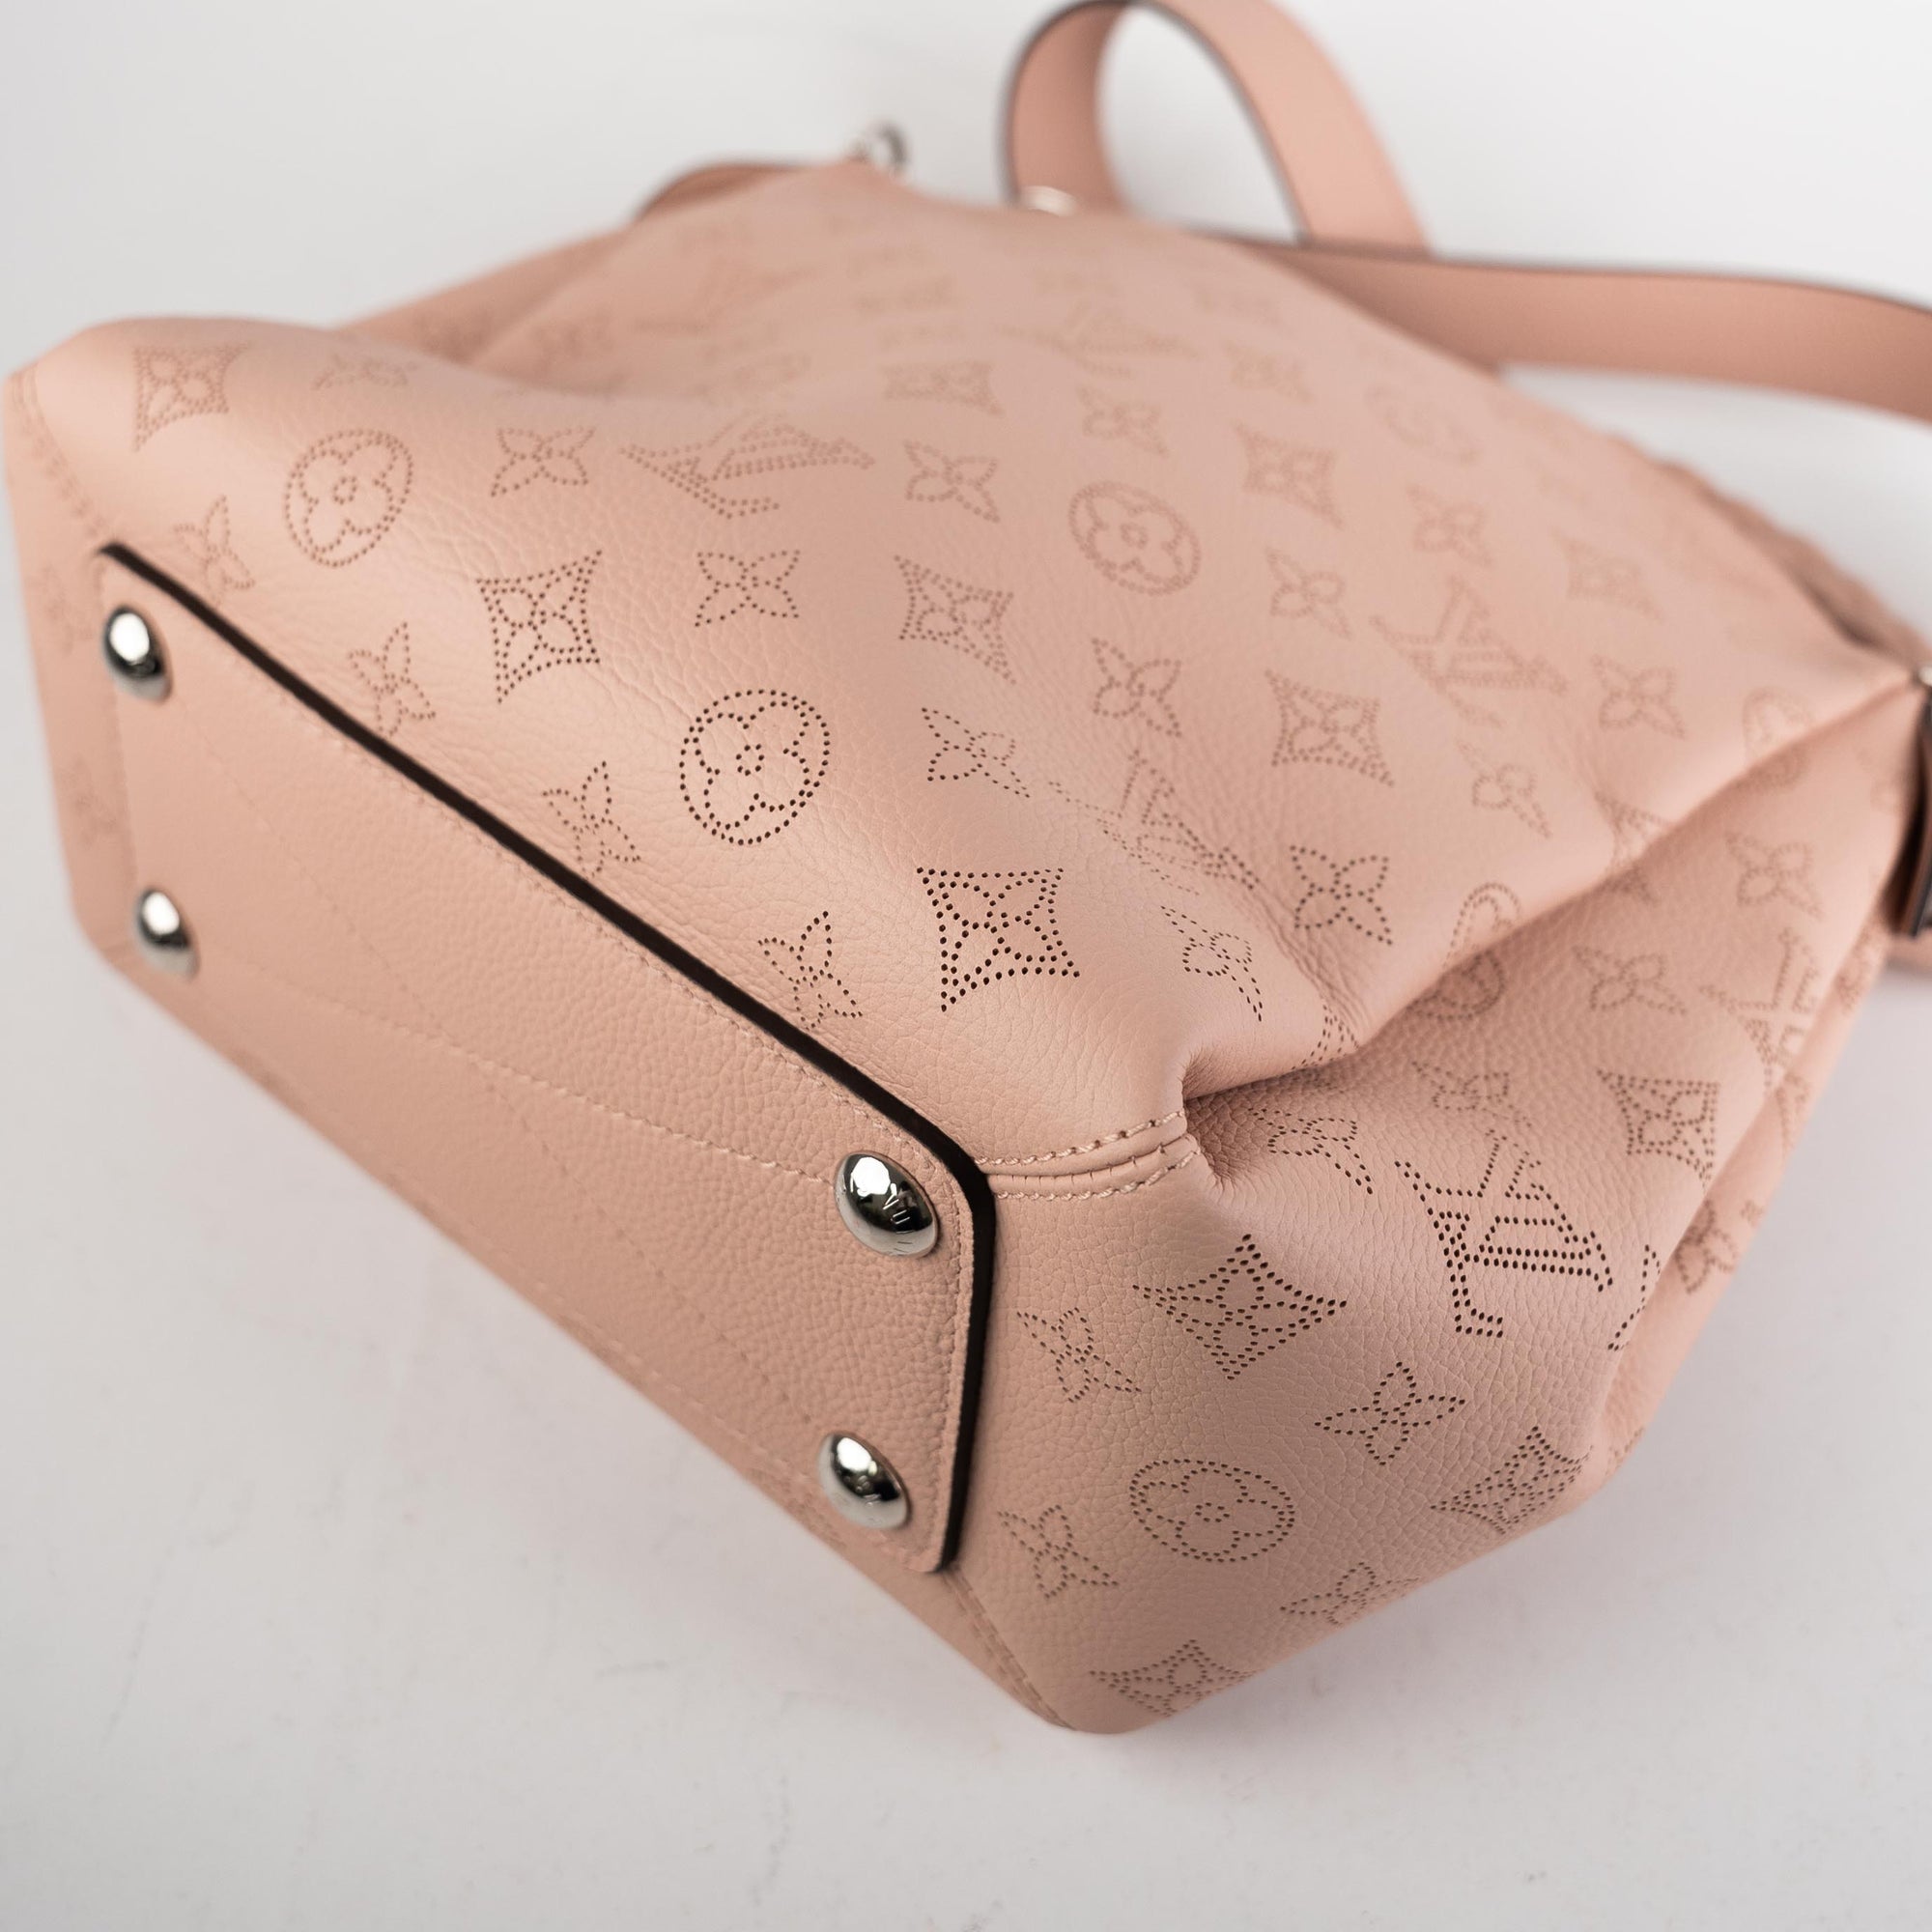 Louis Vuitton Pink Babylone PM Mahina Leather bag - ShopperBoard